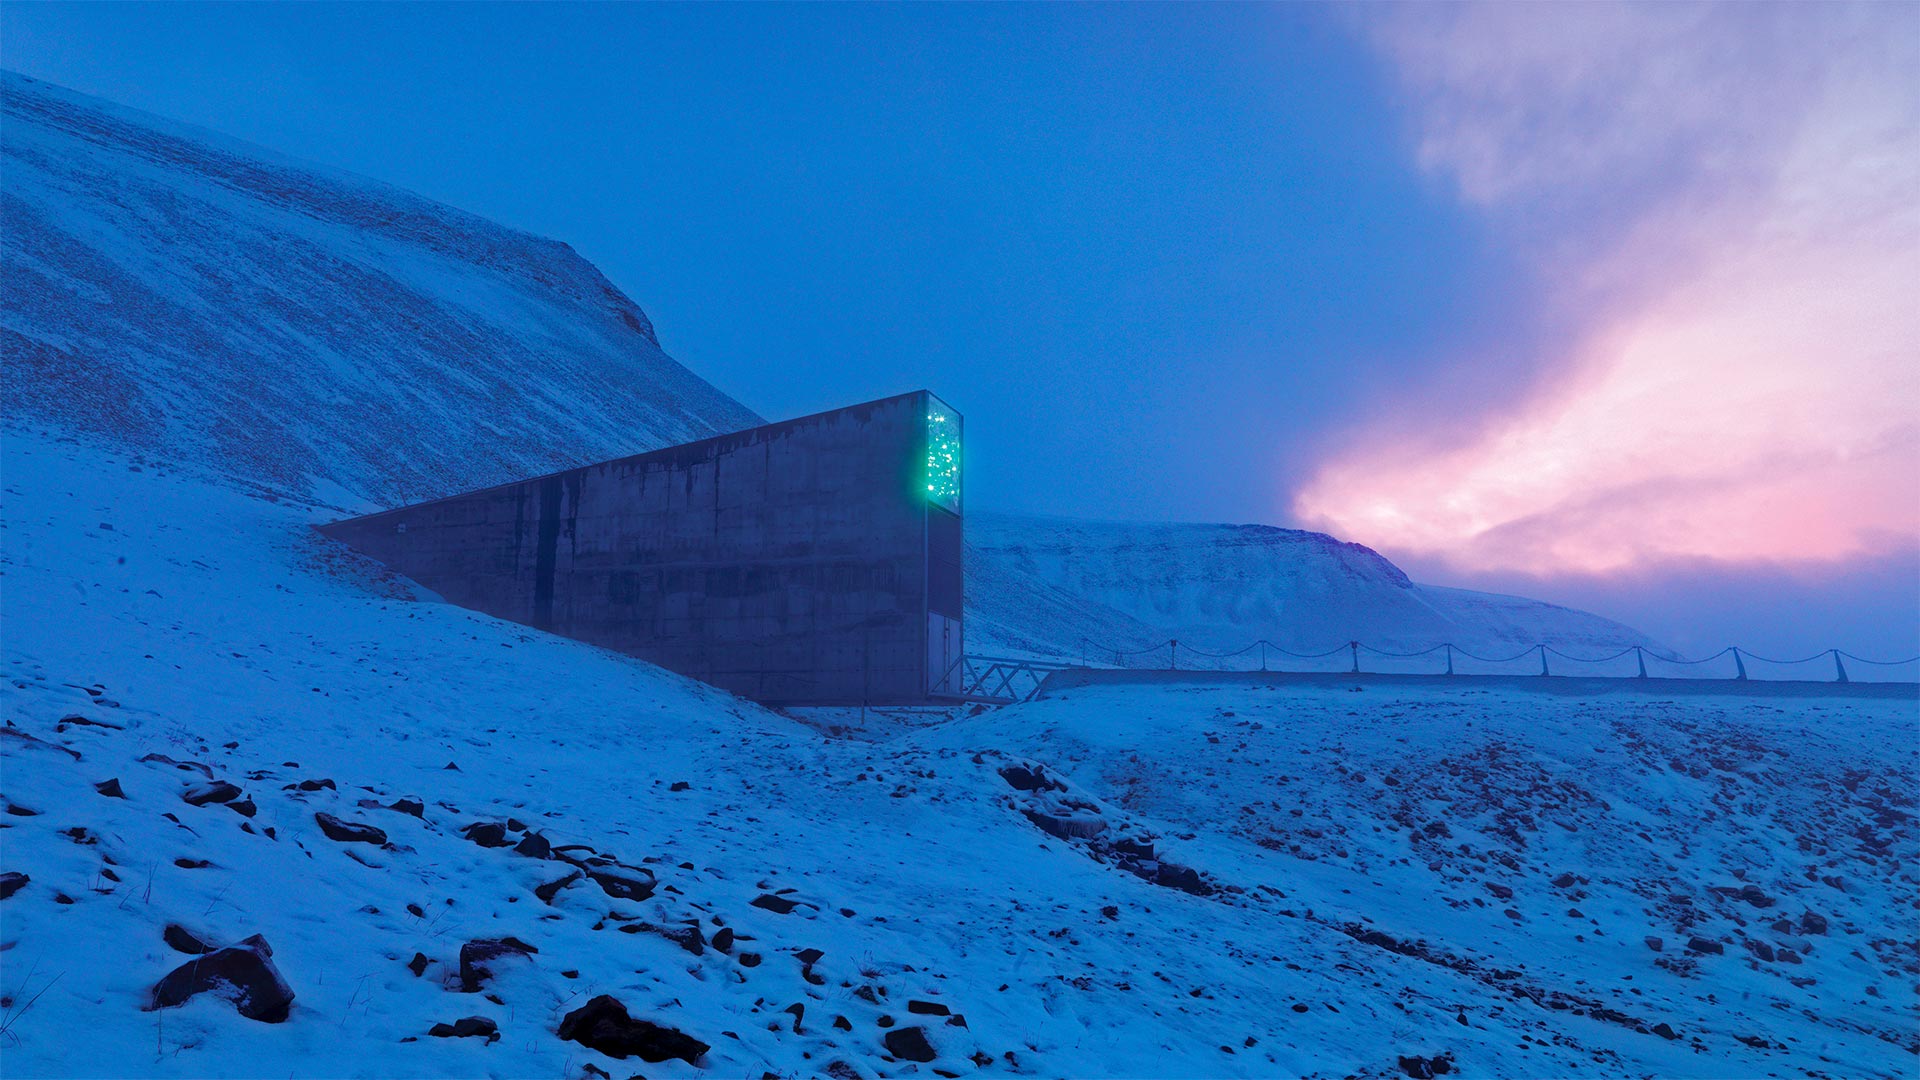 Svalbard Global Seed Vault with a glittering facade designed by artist Dyveke Sanne, Svalbard, Norway - Pal Hermansen